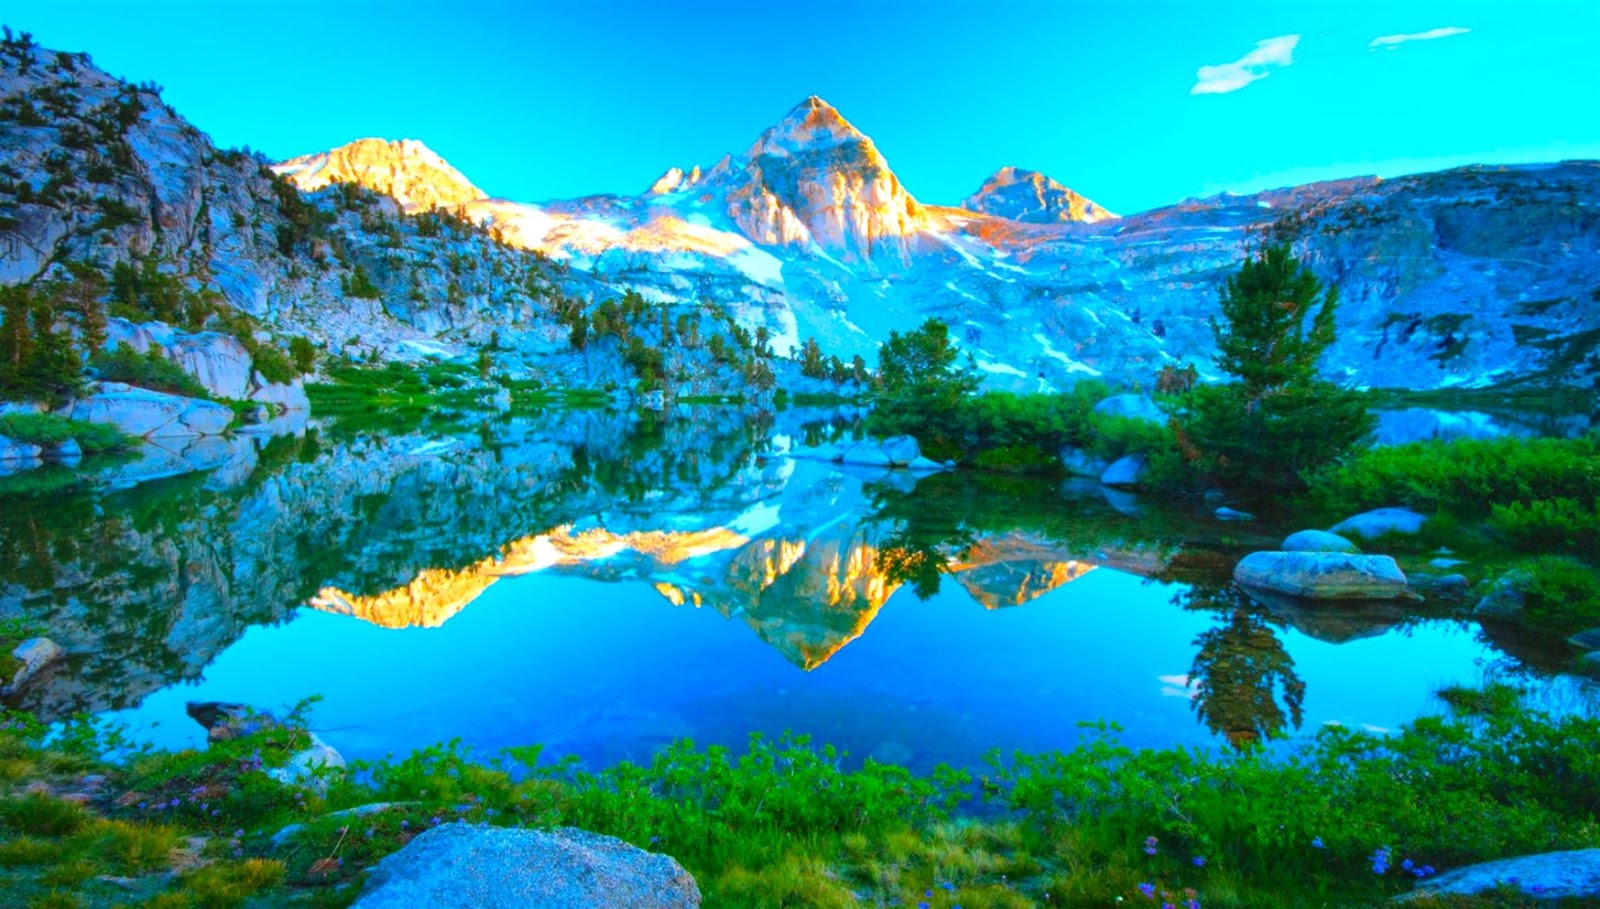 wallpaper hd widescreen high quality desktop,natural landscape,nature,mountain,reflection,mountainous landforms